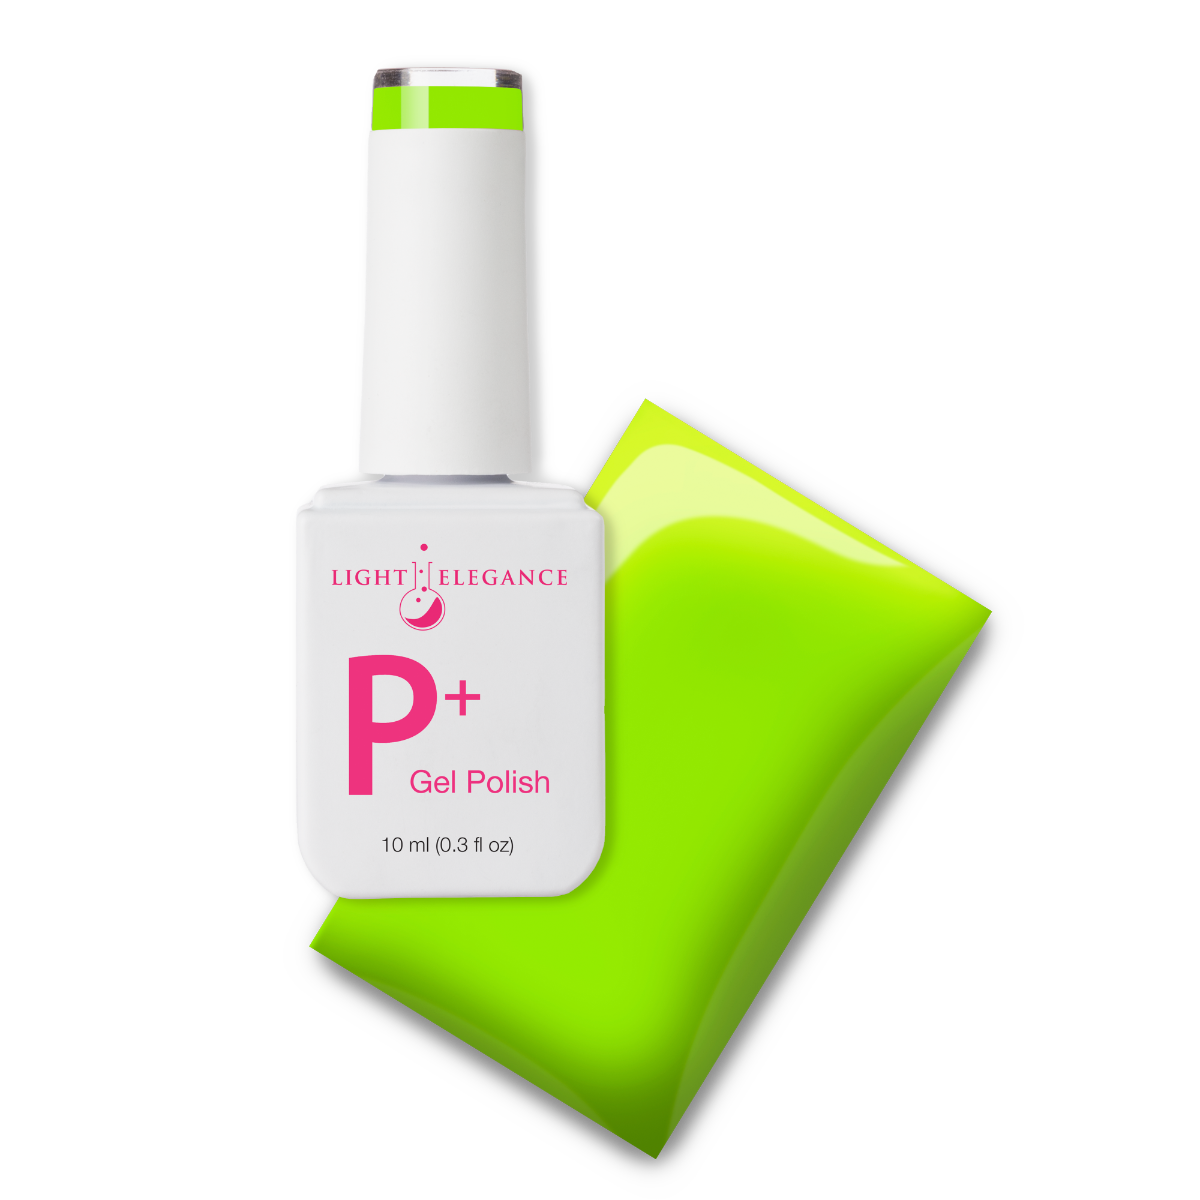 Light Elegance P+ Soak Off Color Gel - Groovy Green :: New Packaging